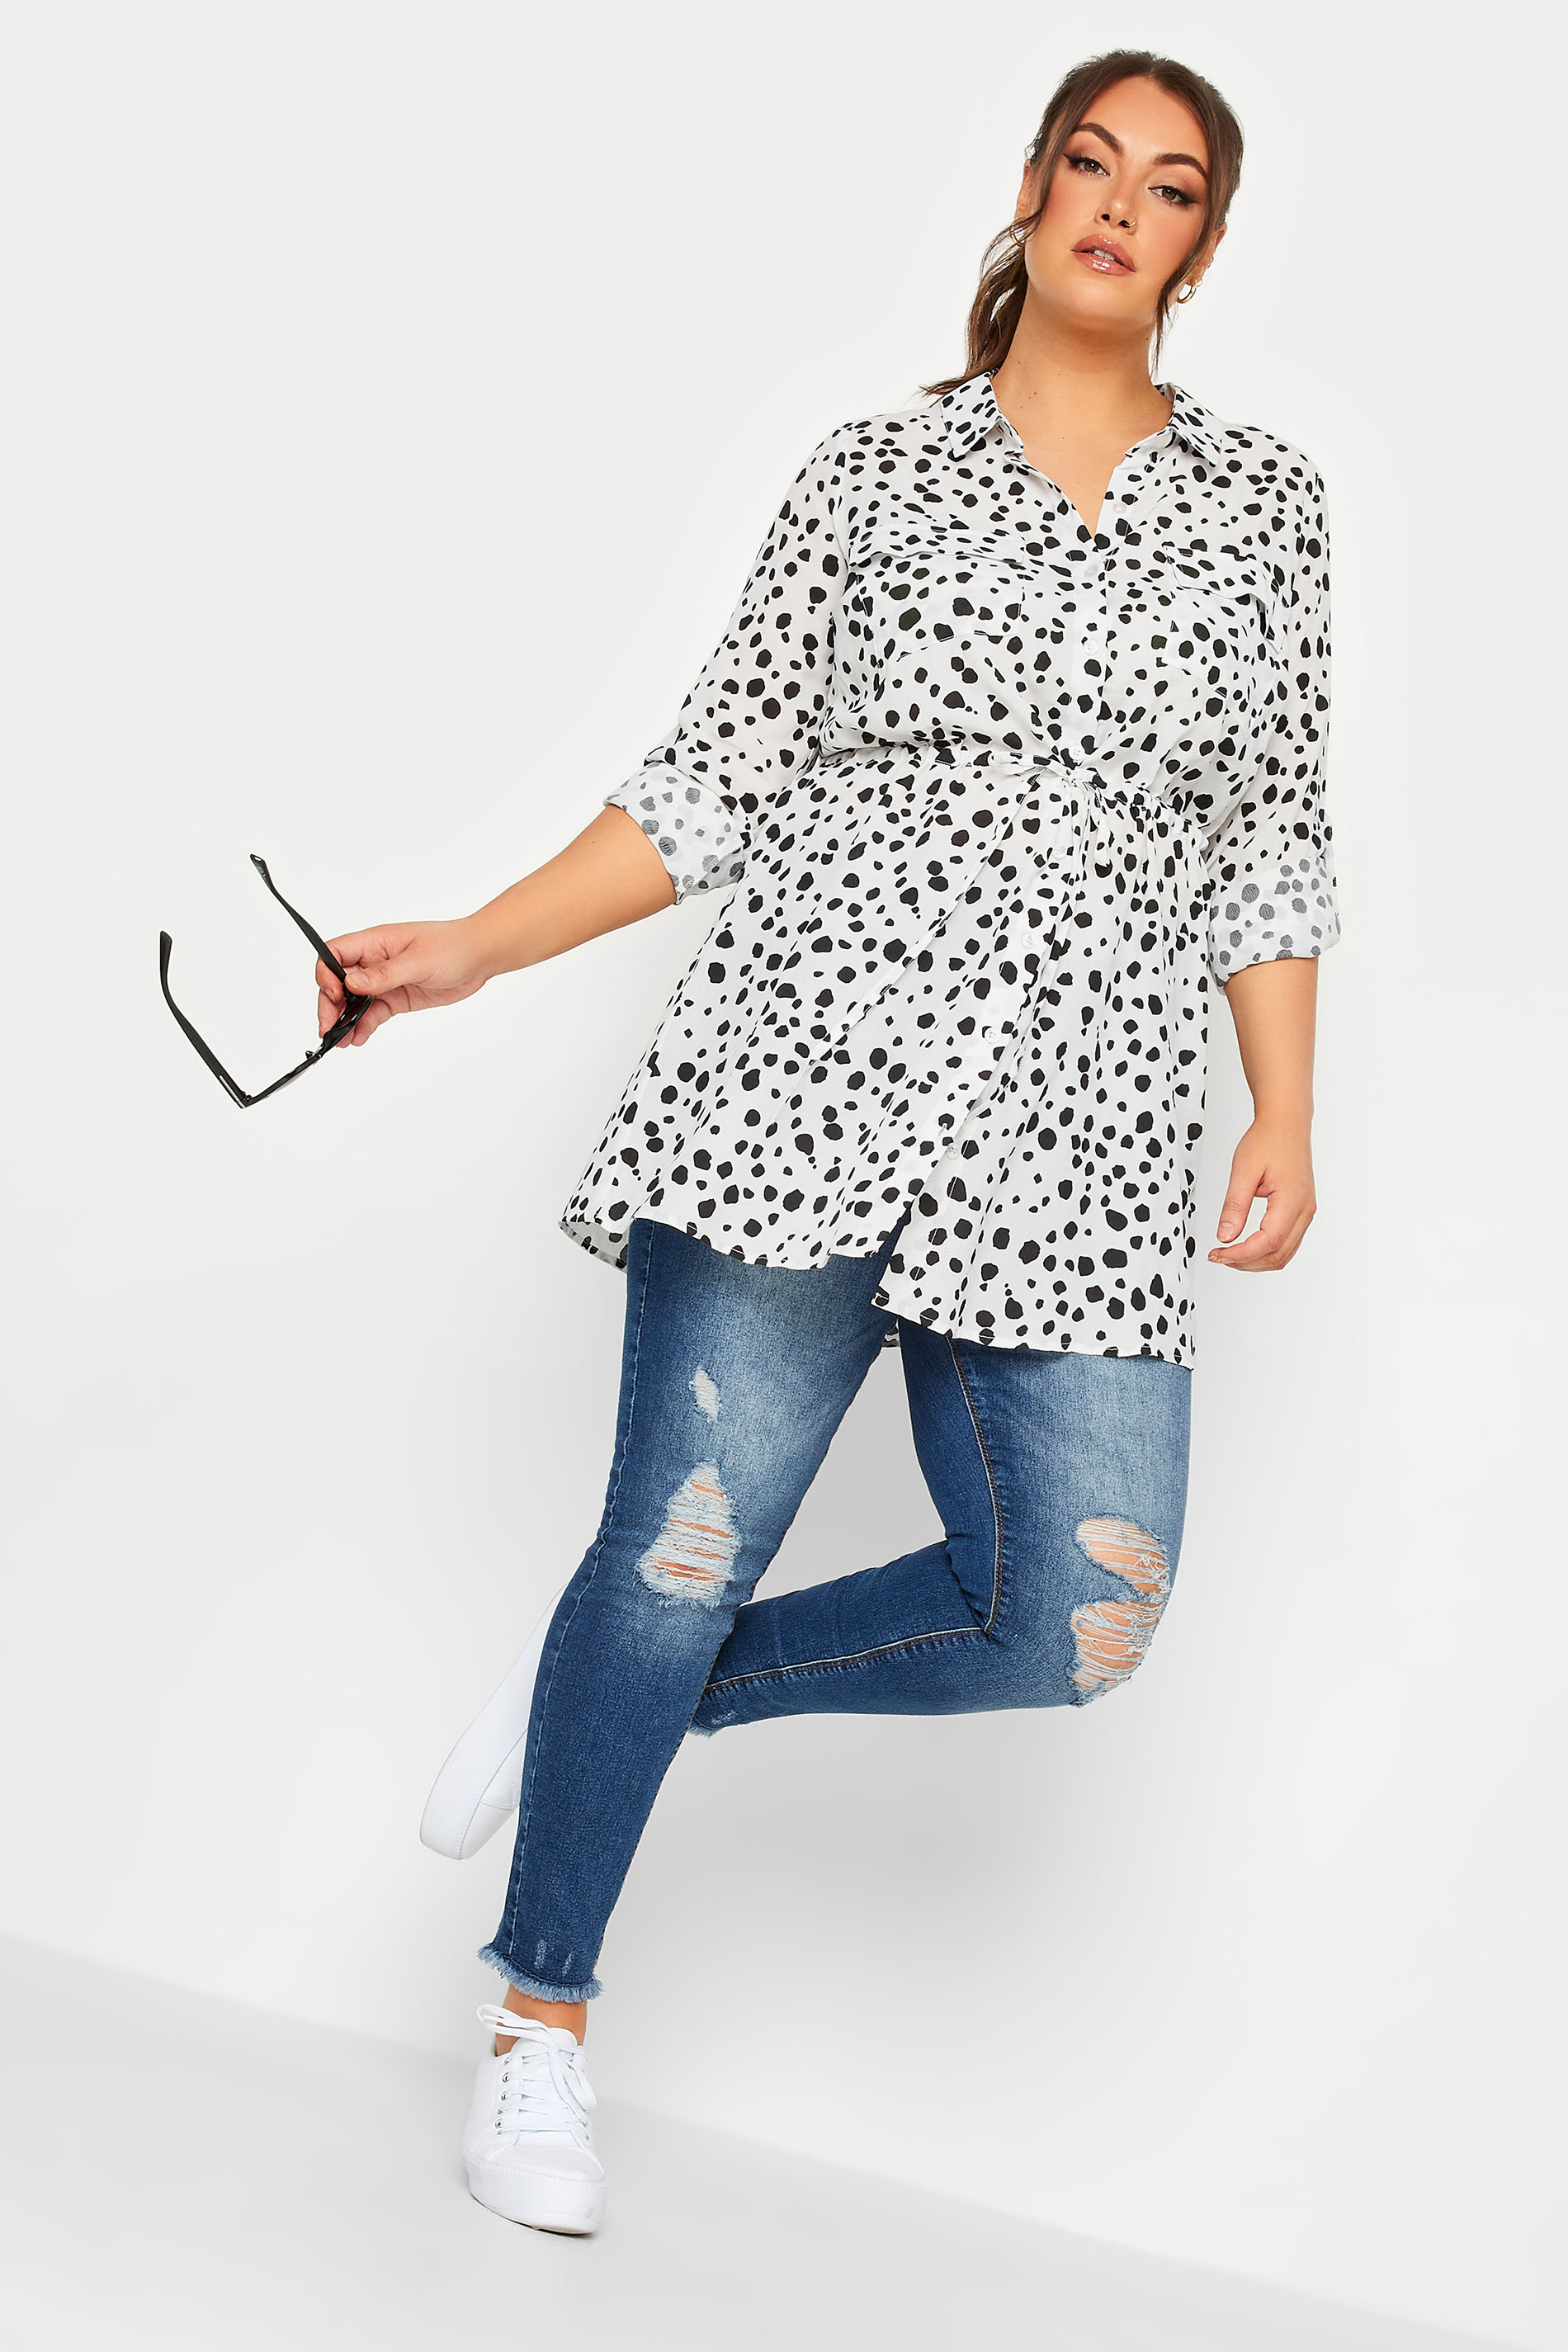 YOURS Plus Size White Dalmatian Print Utility Tunic Shirt | Yours Clothing 3